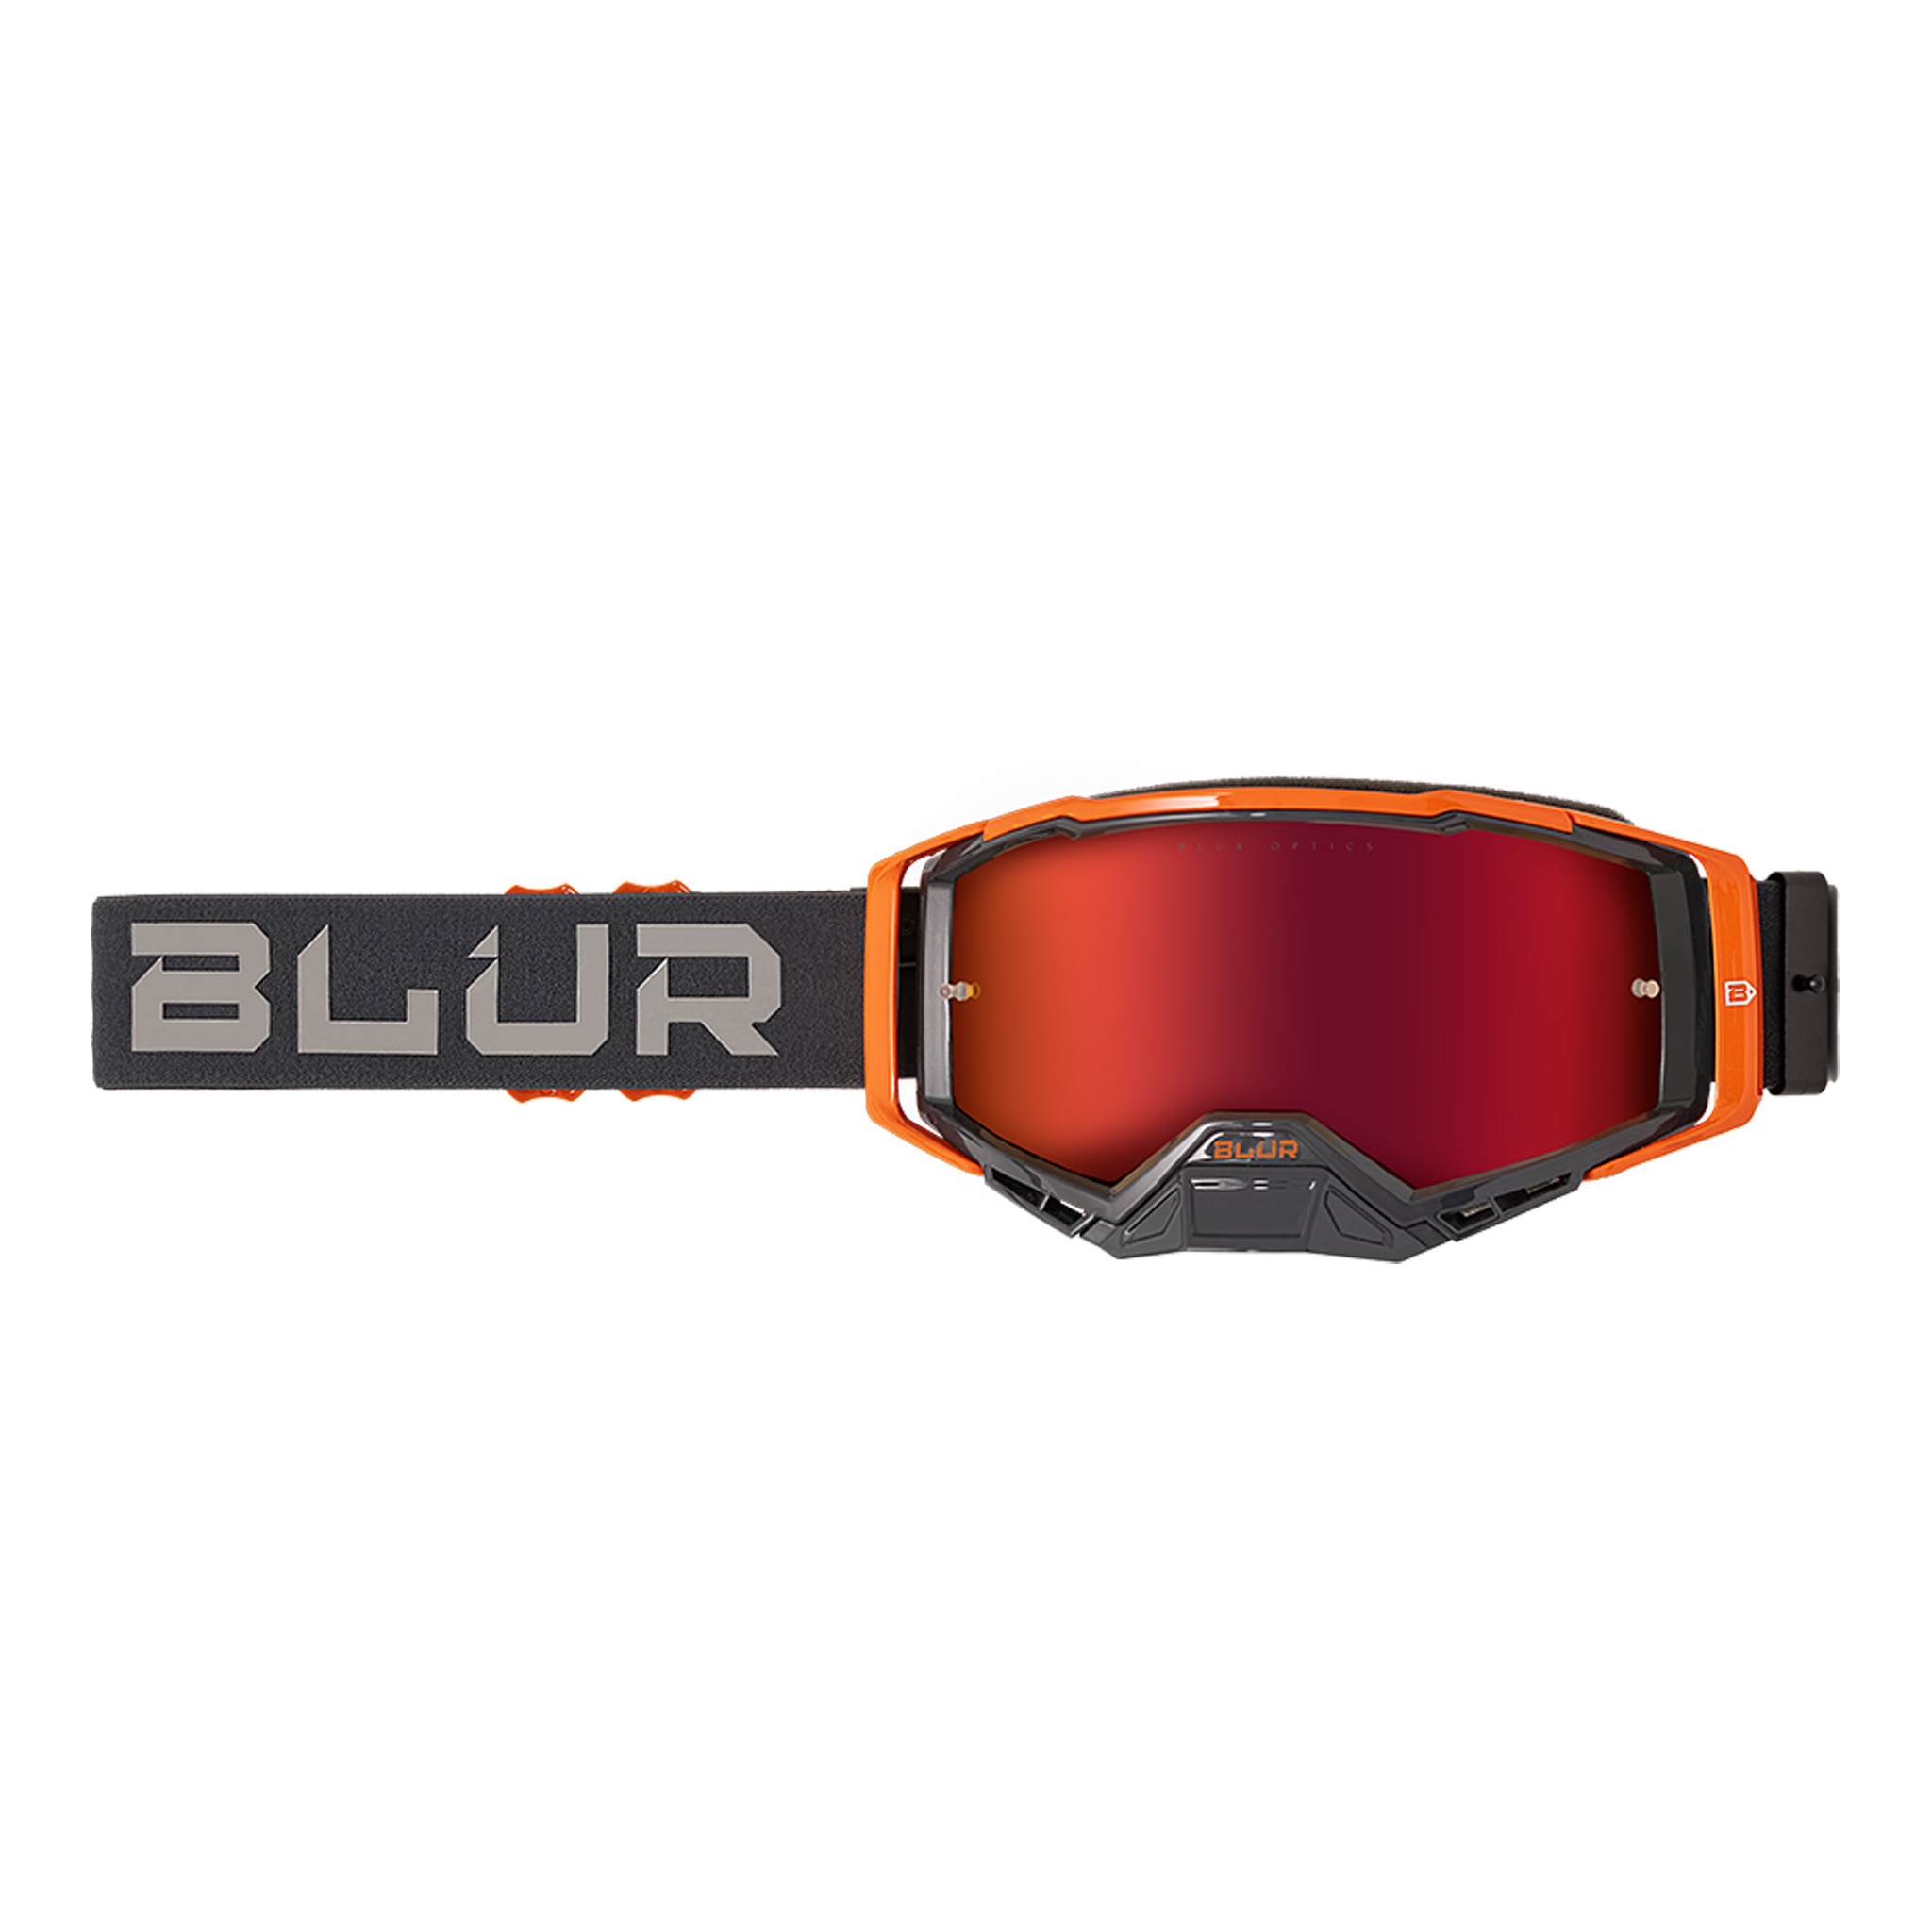 Blur Goggles B40 Goggle, Gray/Orange, Radium Red Lens